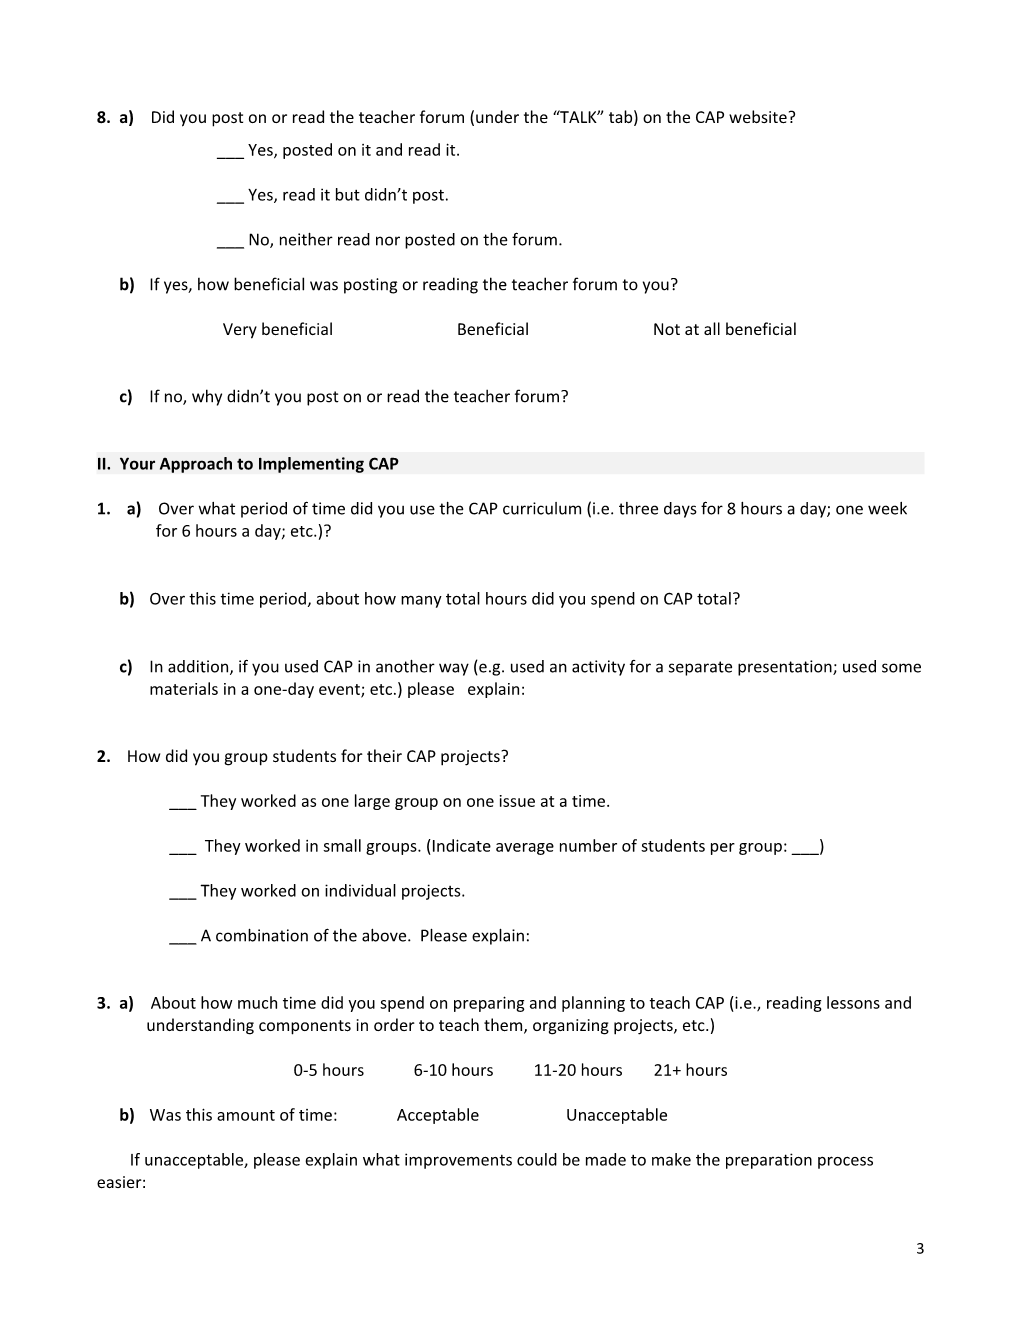 Rough Draft Questions for CAP Teacher Questionnaire